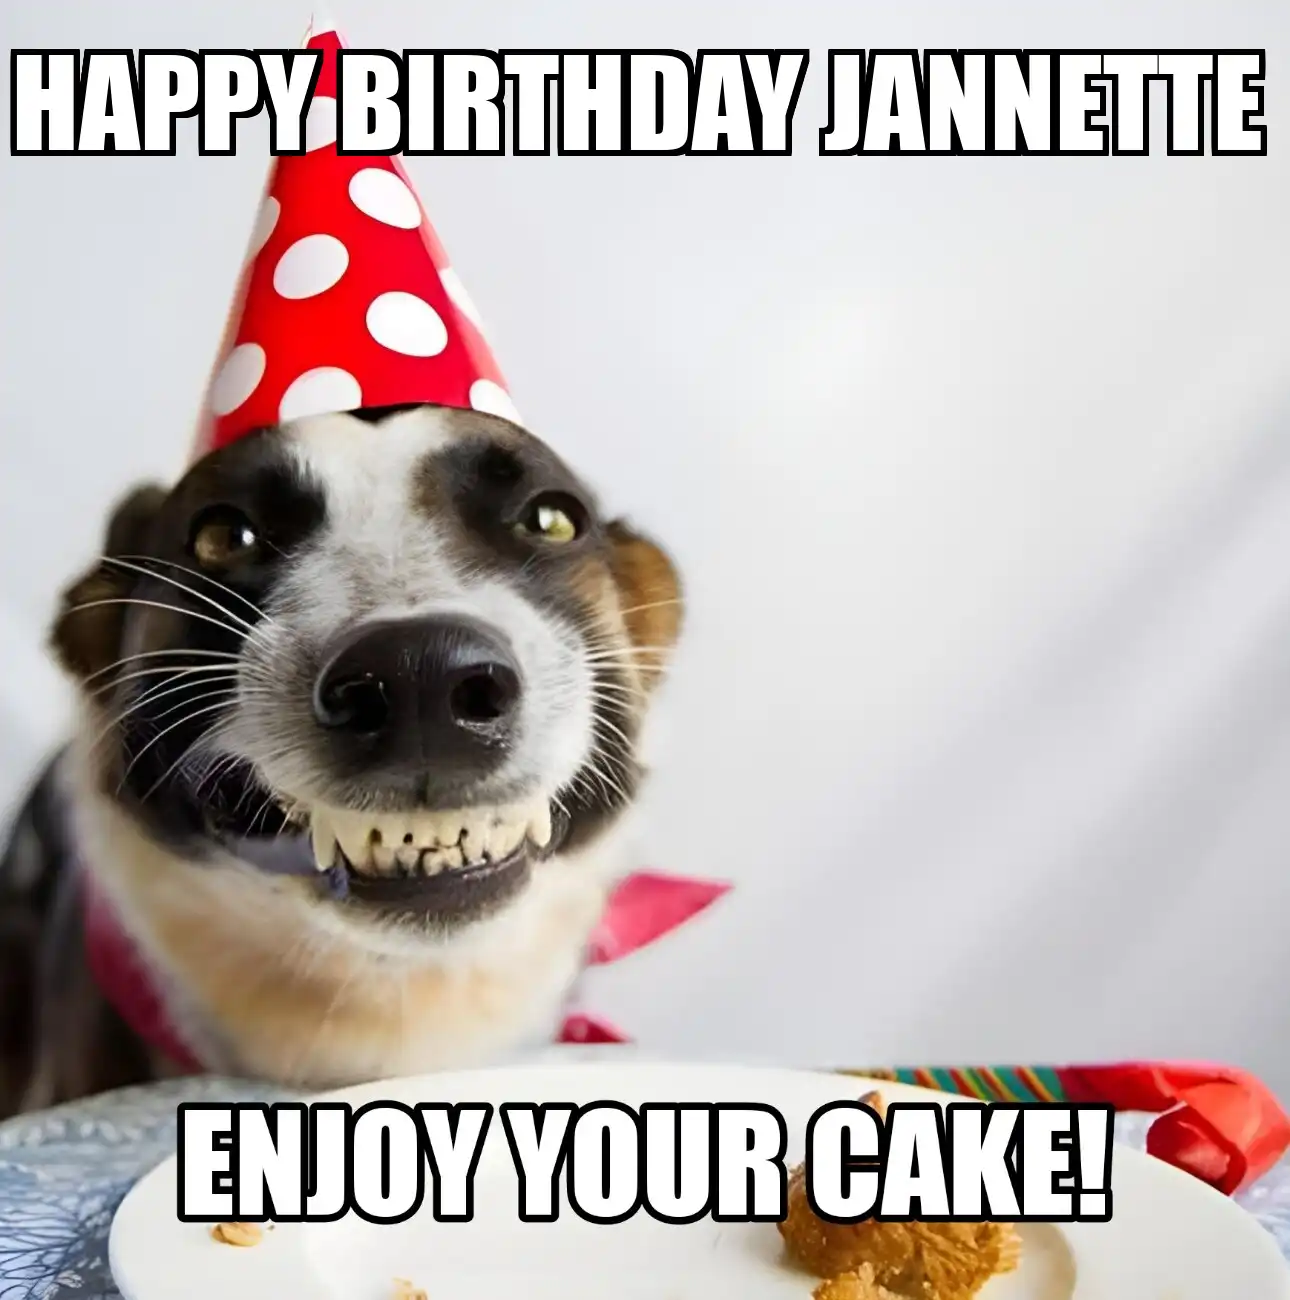 Happy Birthday Jannette Enjoy Your Cake Dog Meme